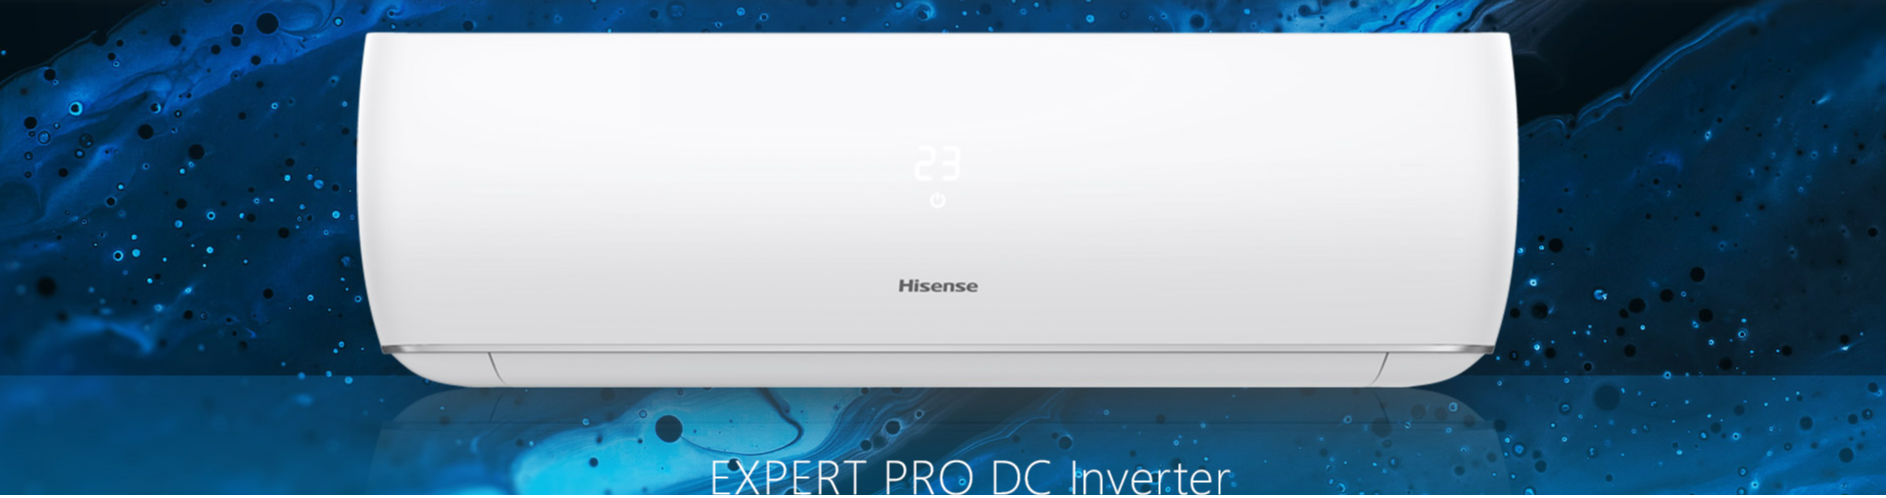 Hisense EXPERT PRO DC Inverter